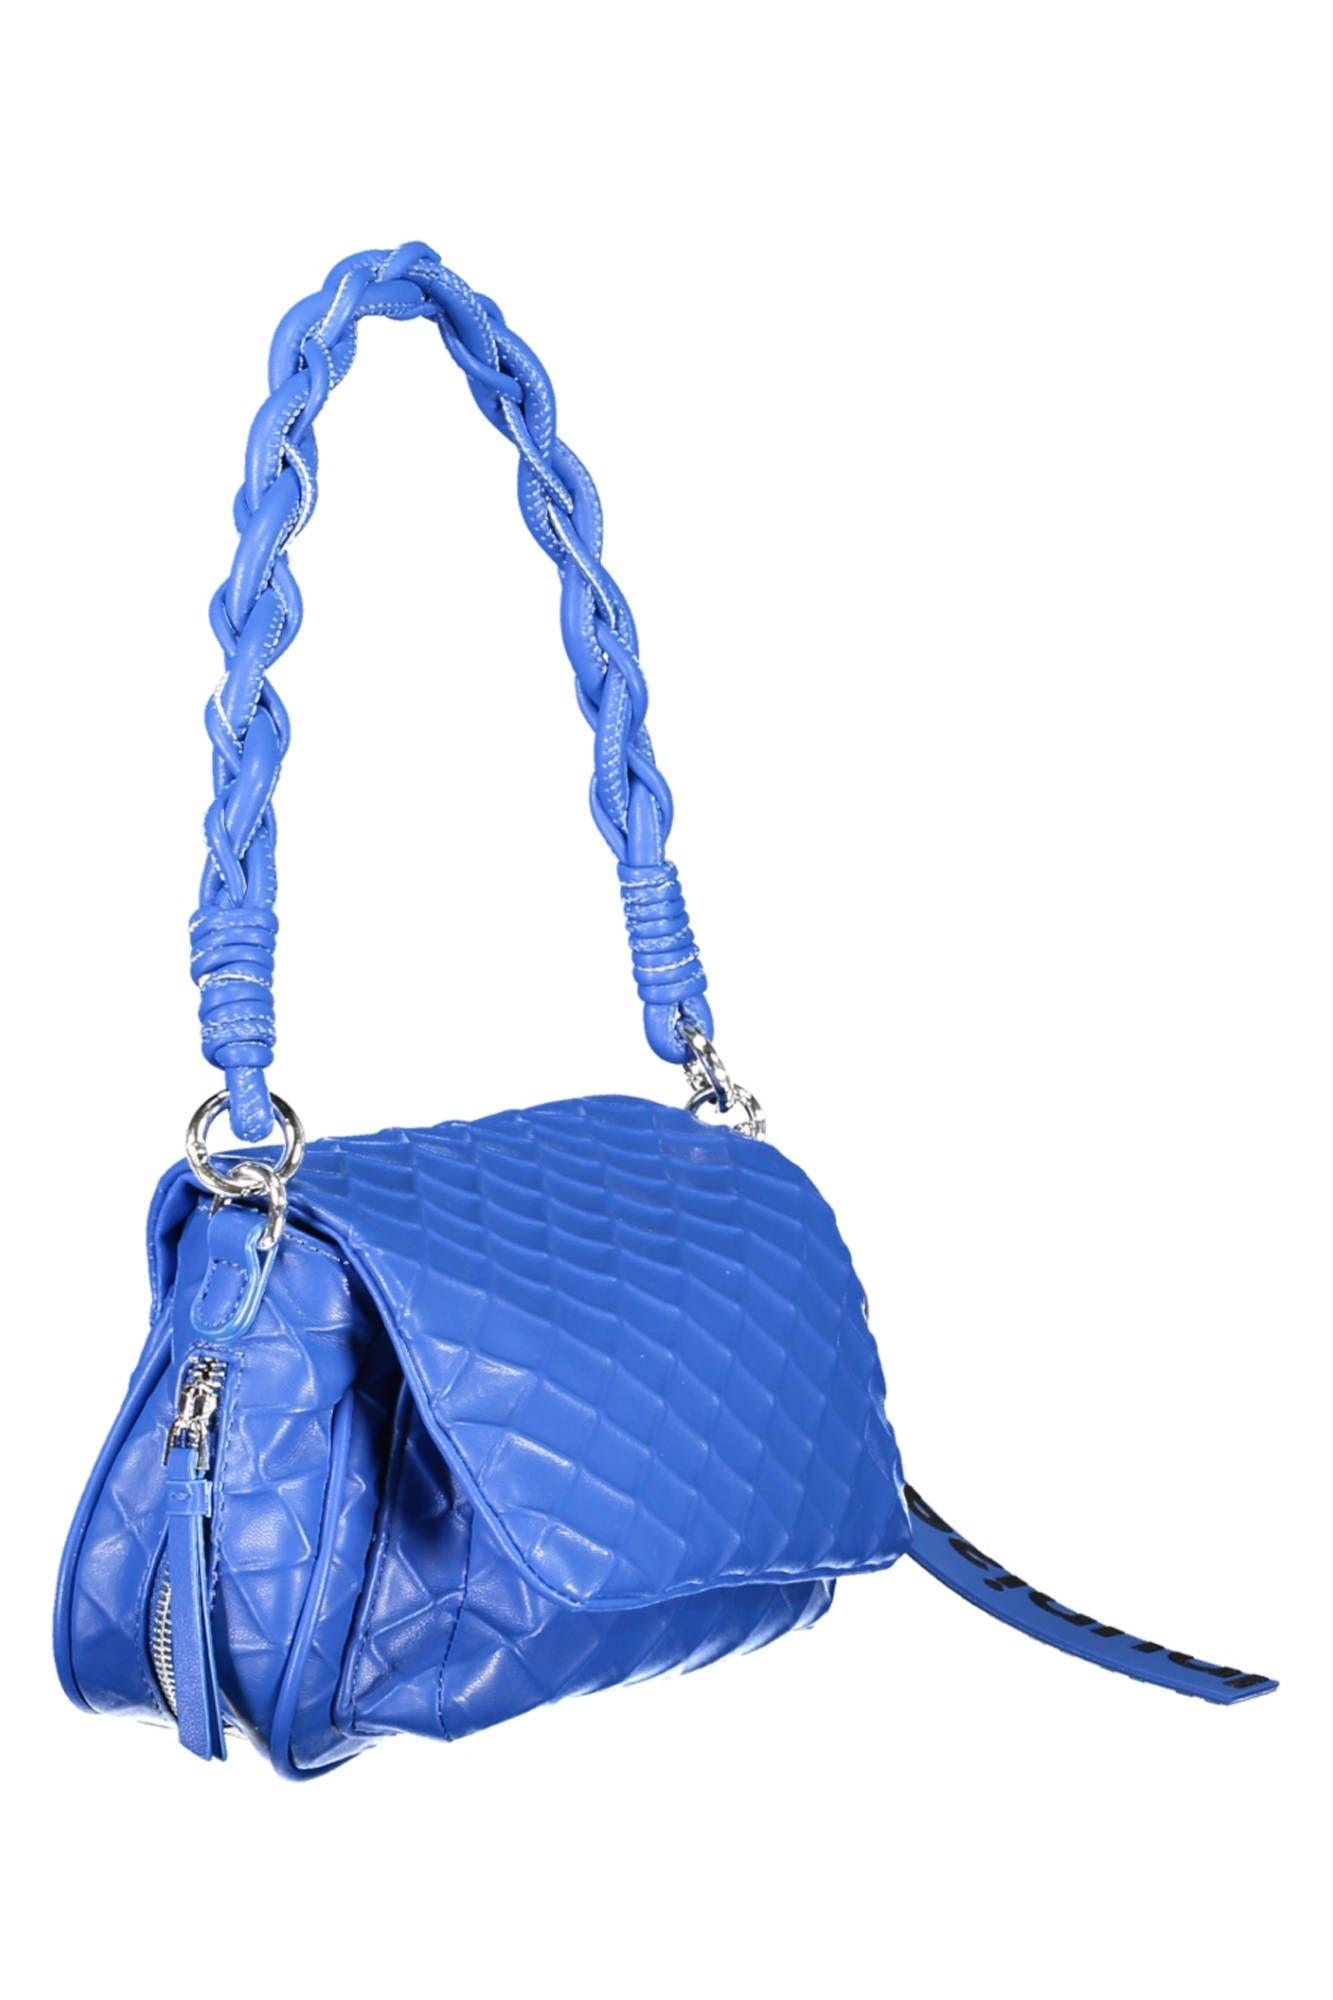 Desigual Chic Expandable Blue Handbag with Contrasting Details - PER.FASHION